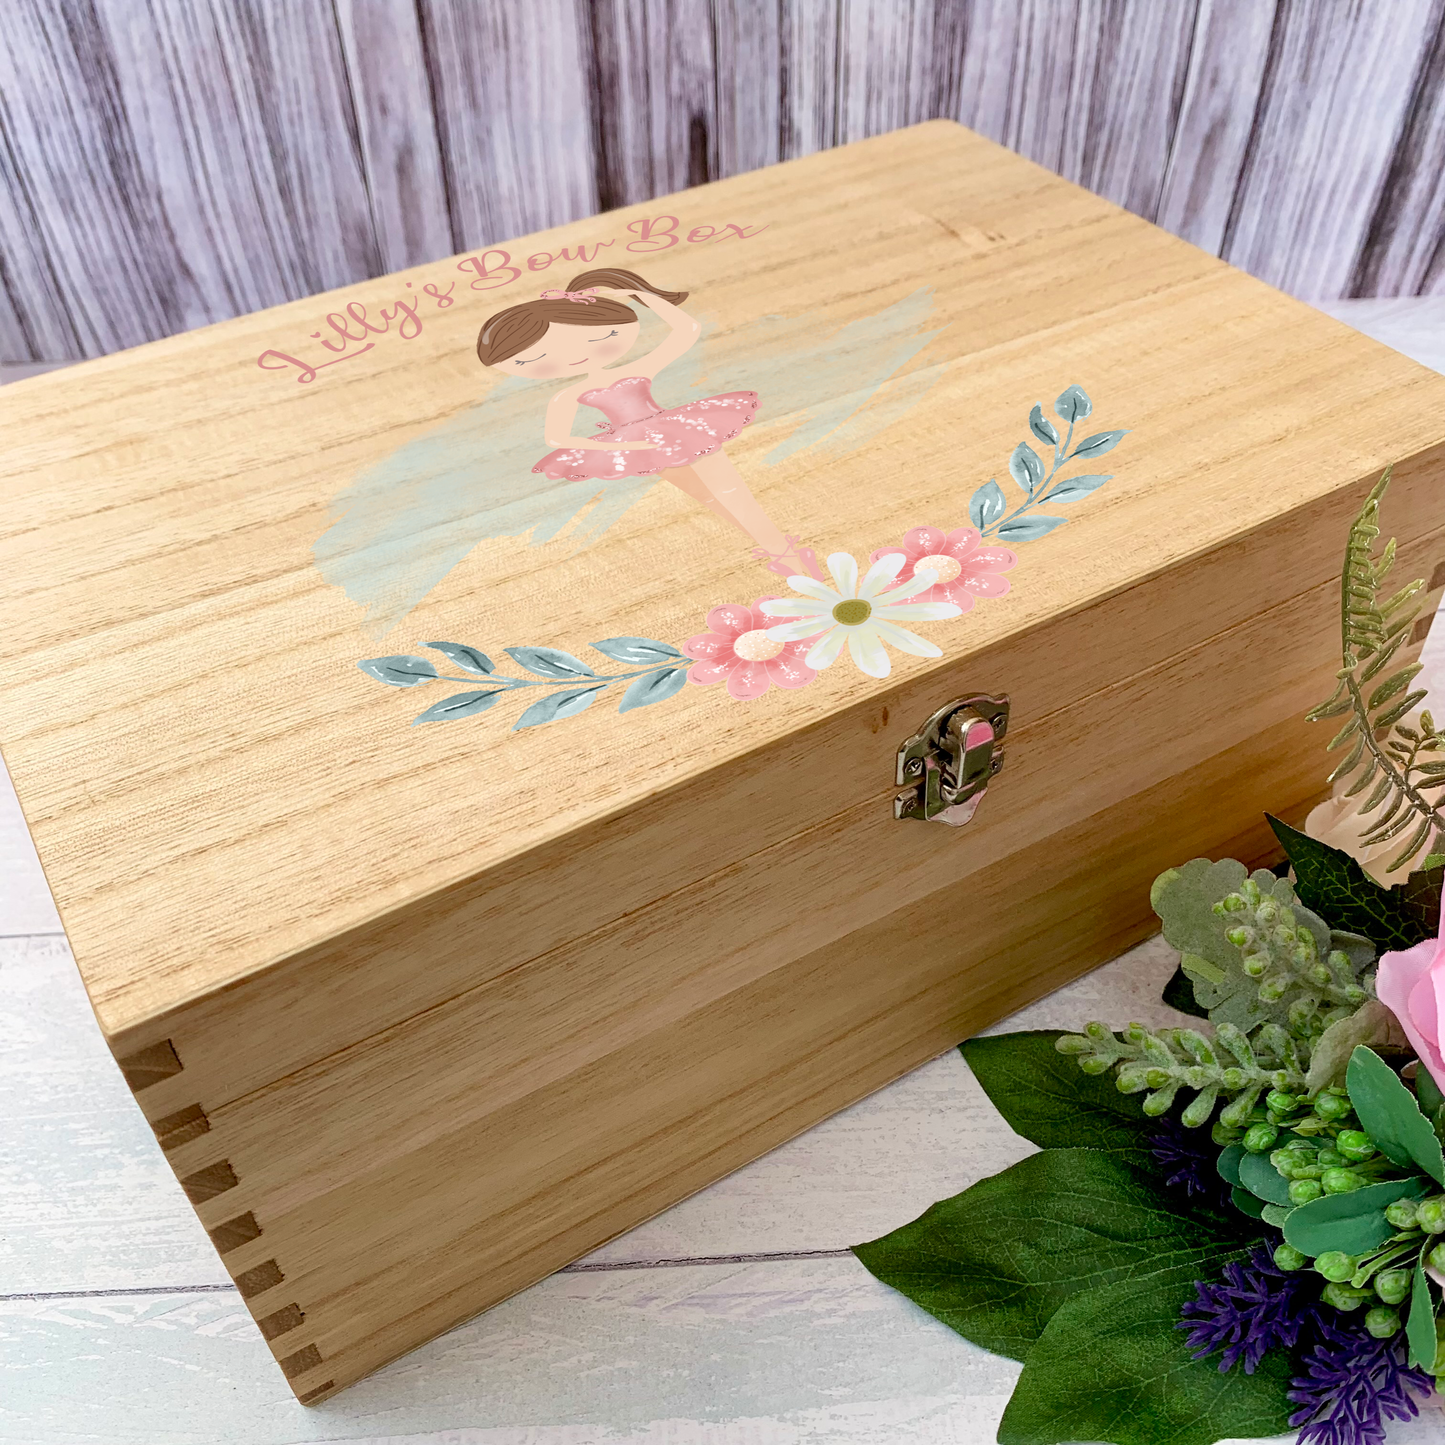 Ballerina Bow Box, personalised wooden box